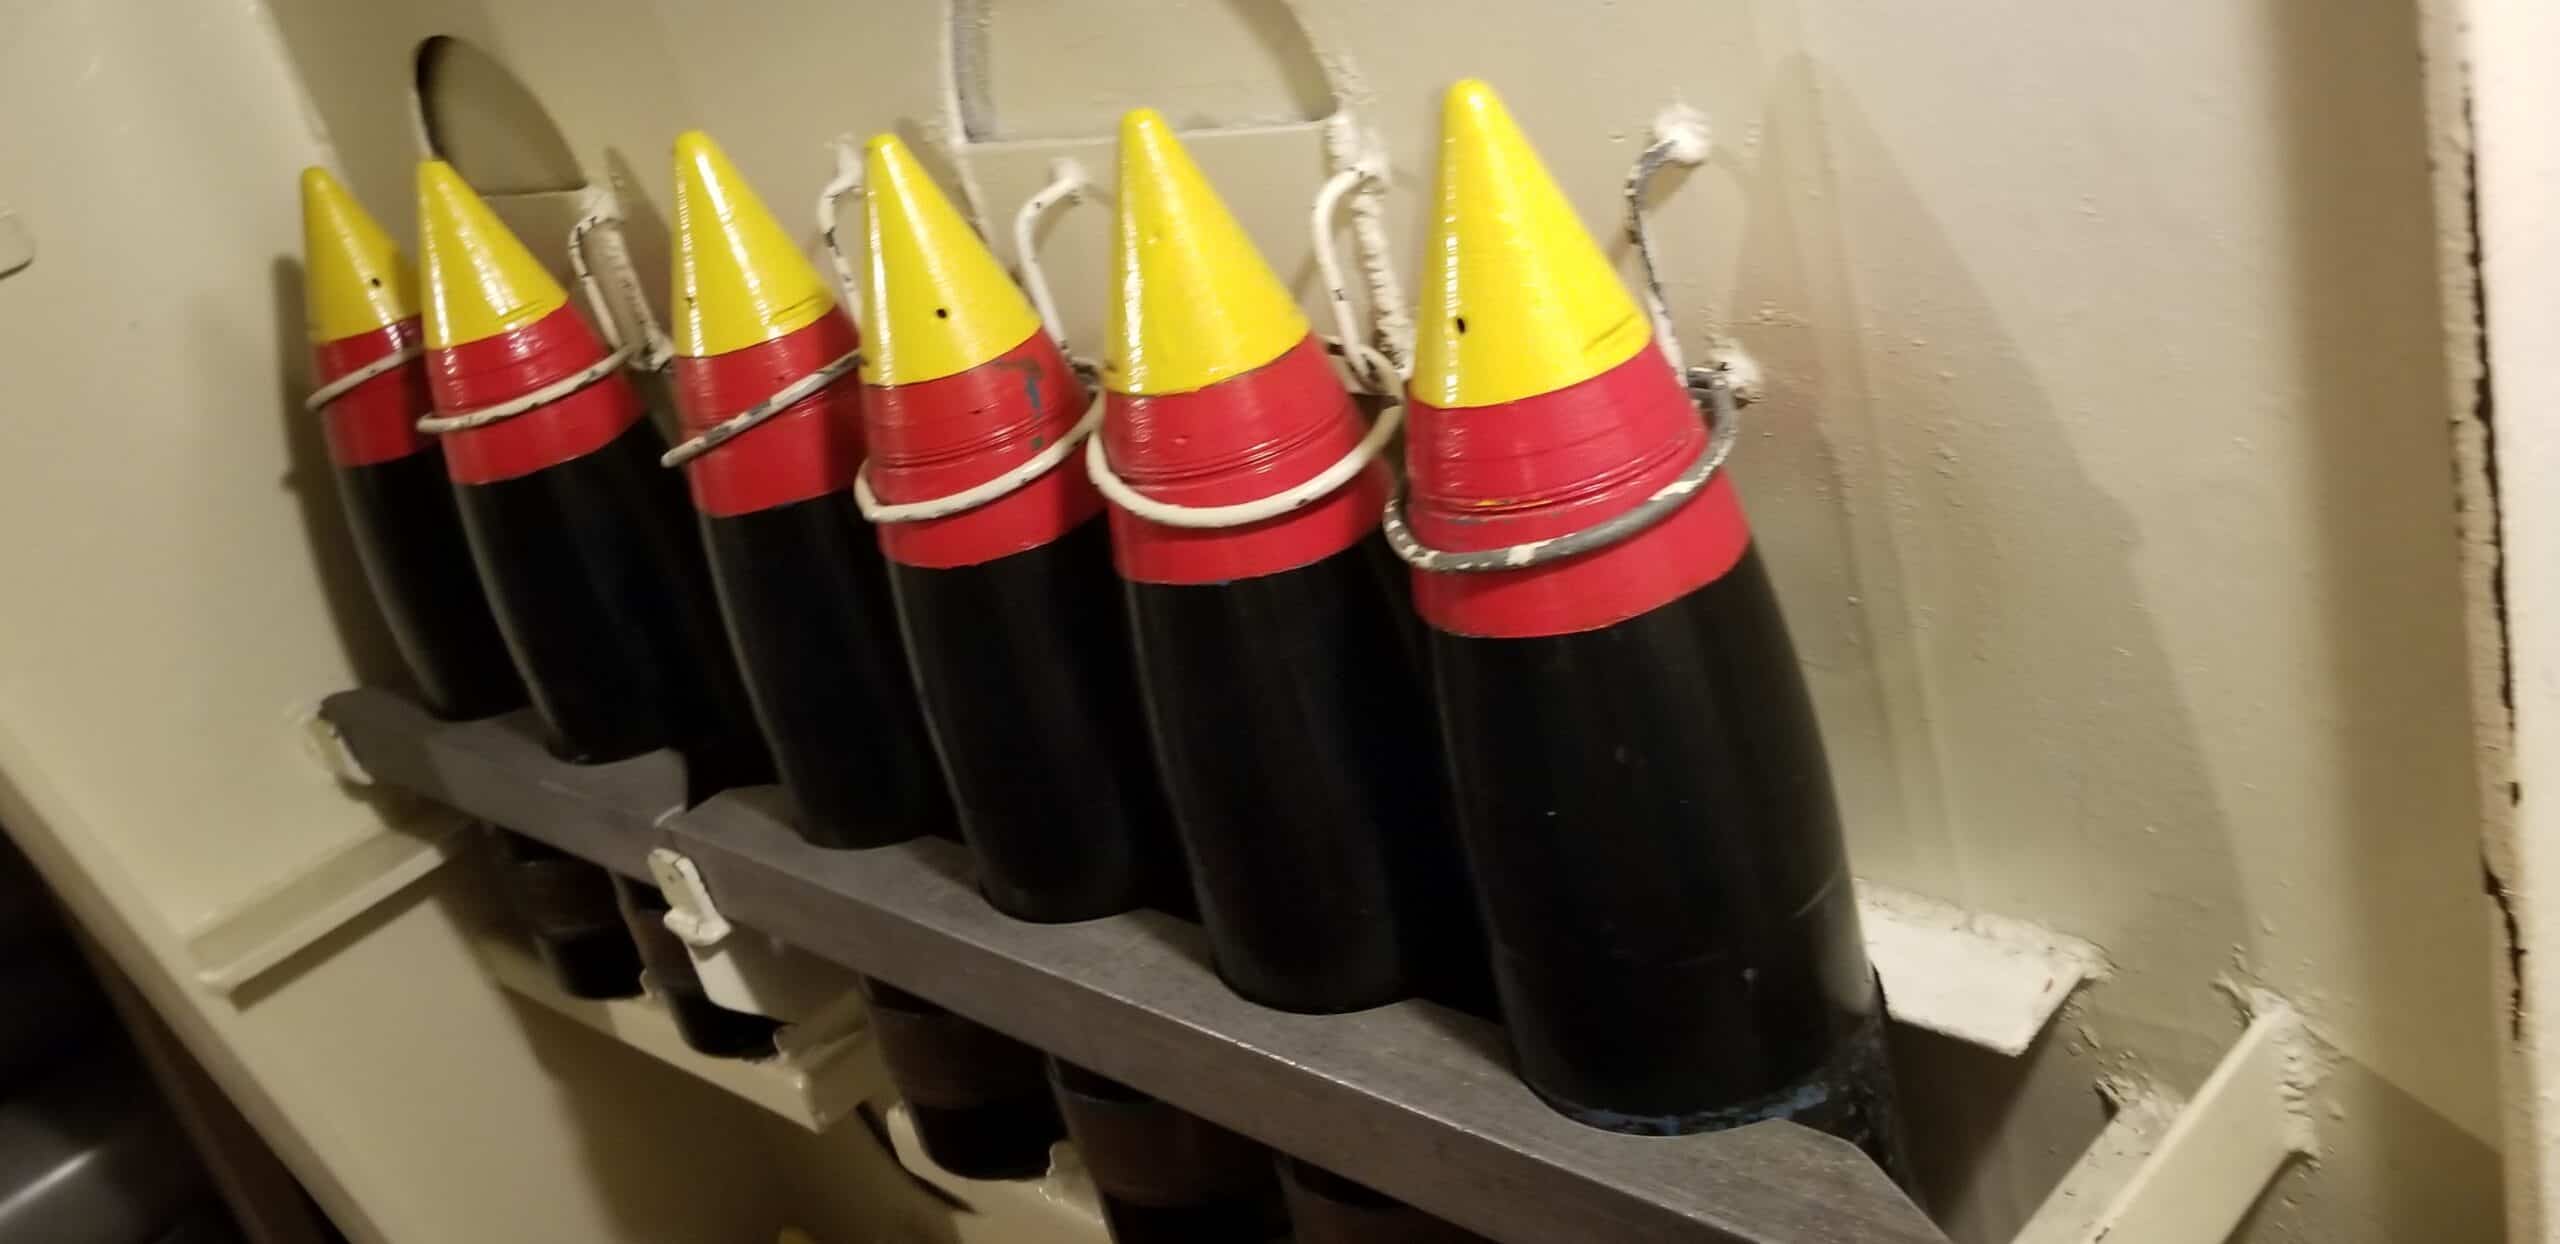 ammunition on the military warship USS Kidd